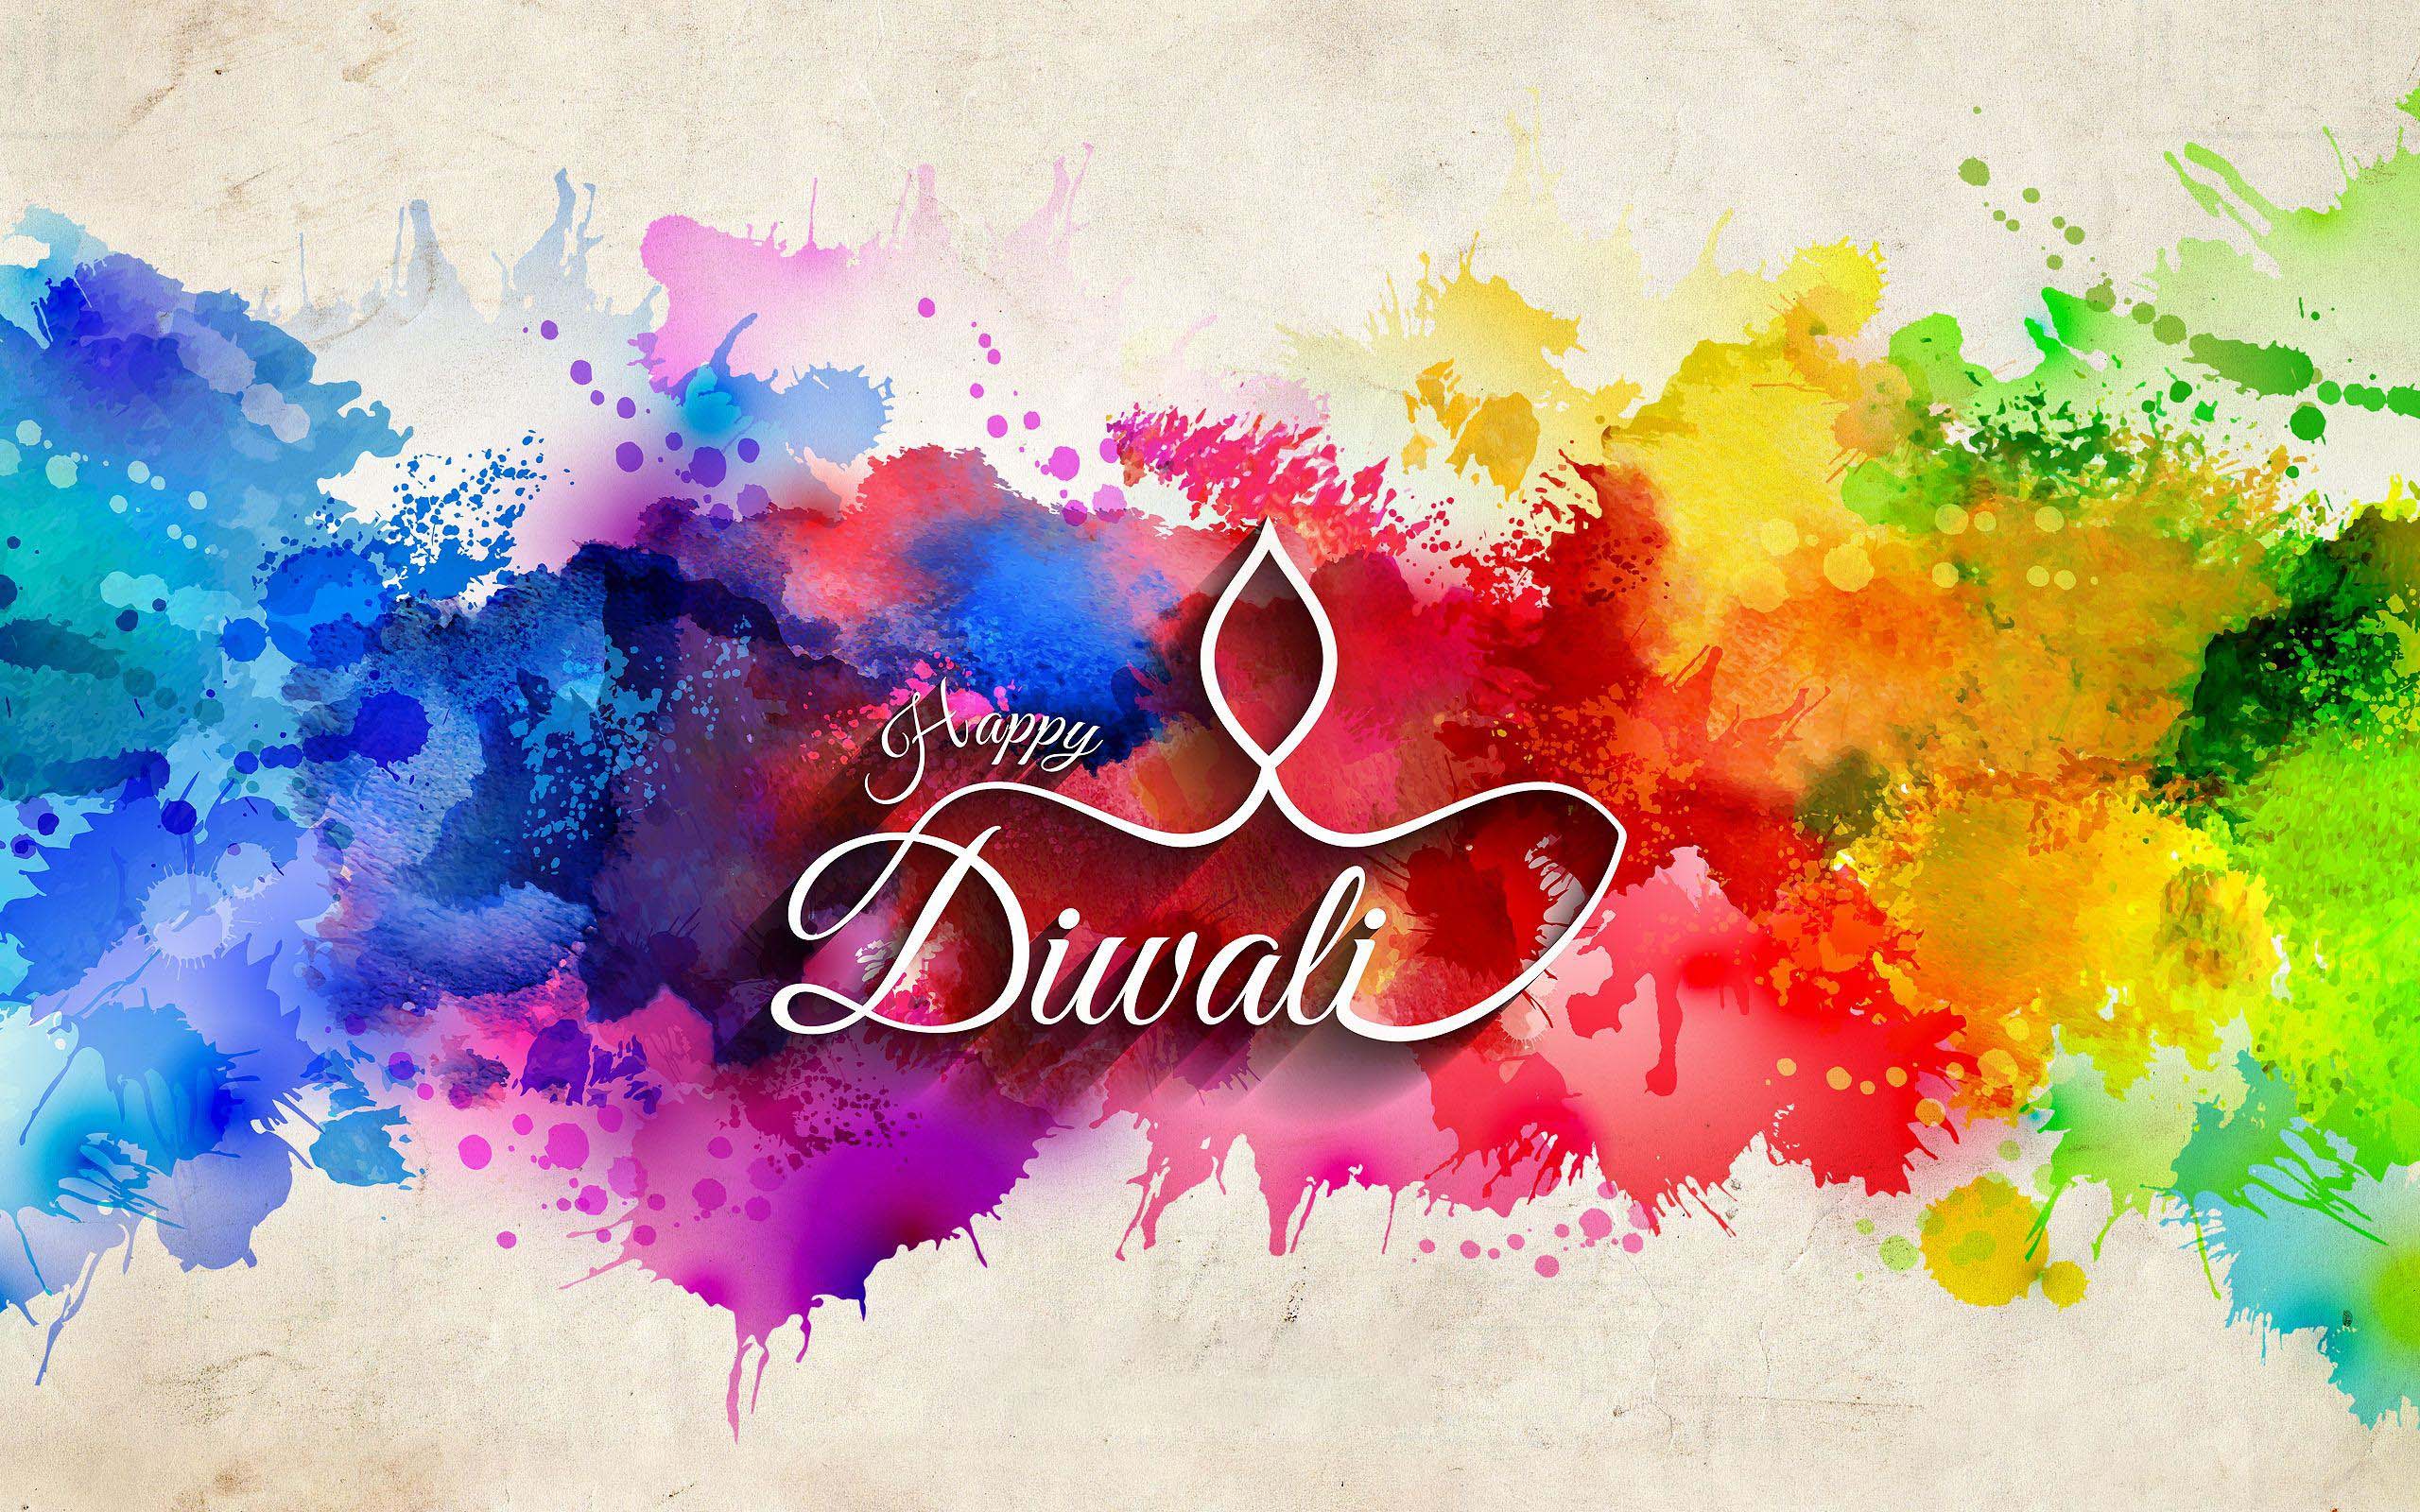 Wonderful Images For Wishing Happy Diwali